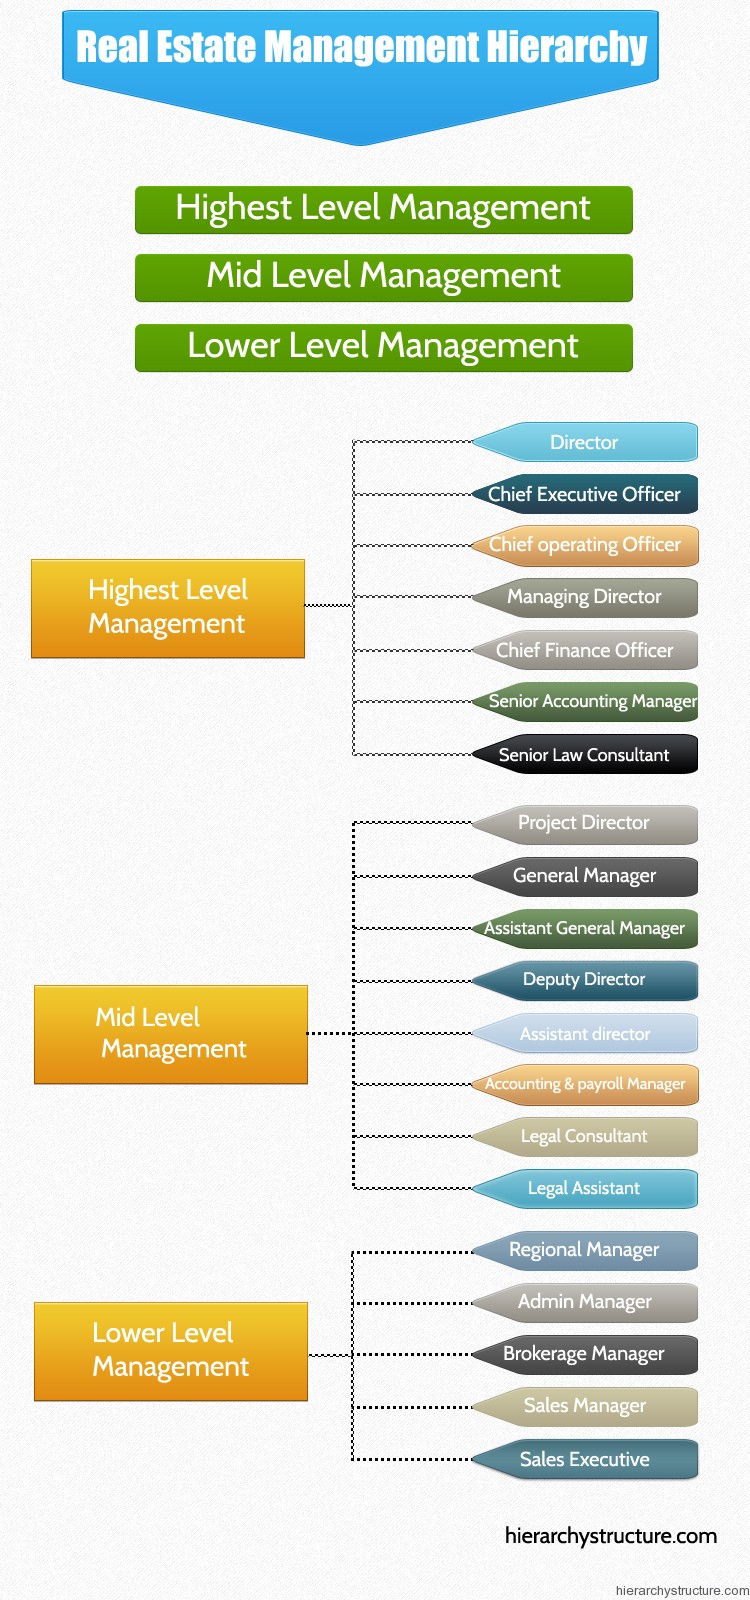 Real Estate Management Hierarchy | Hierarchystructure.com